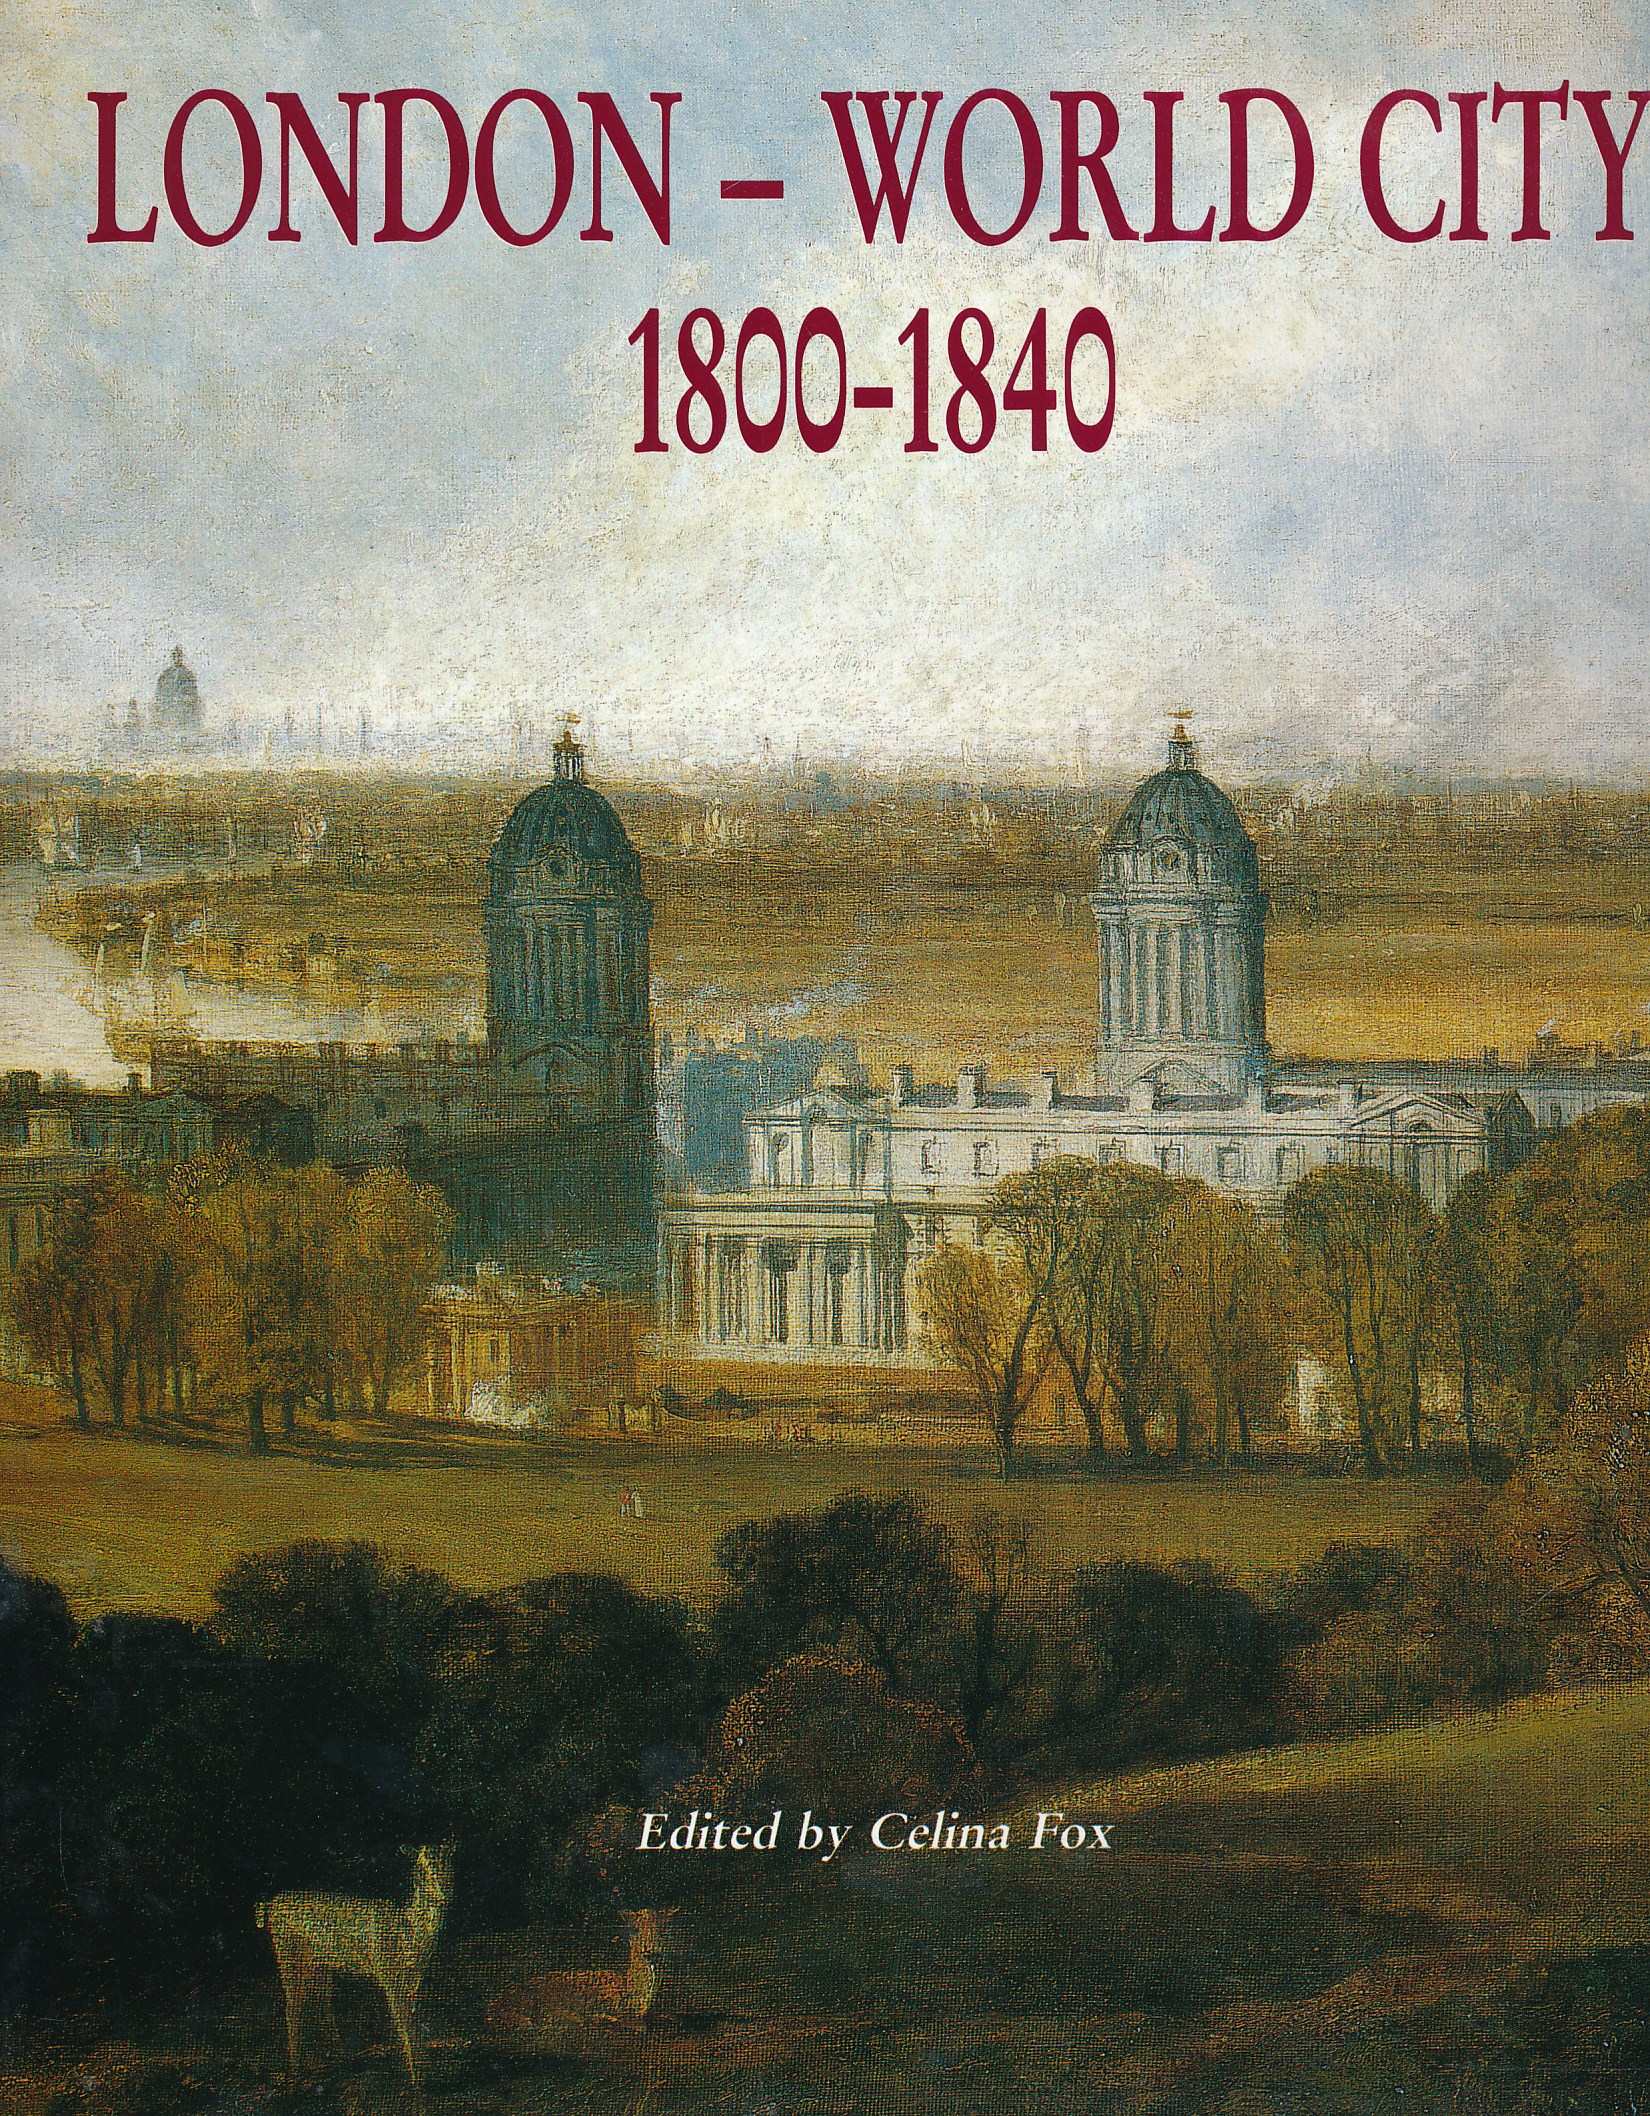 London - World City 1800-1840